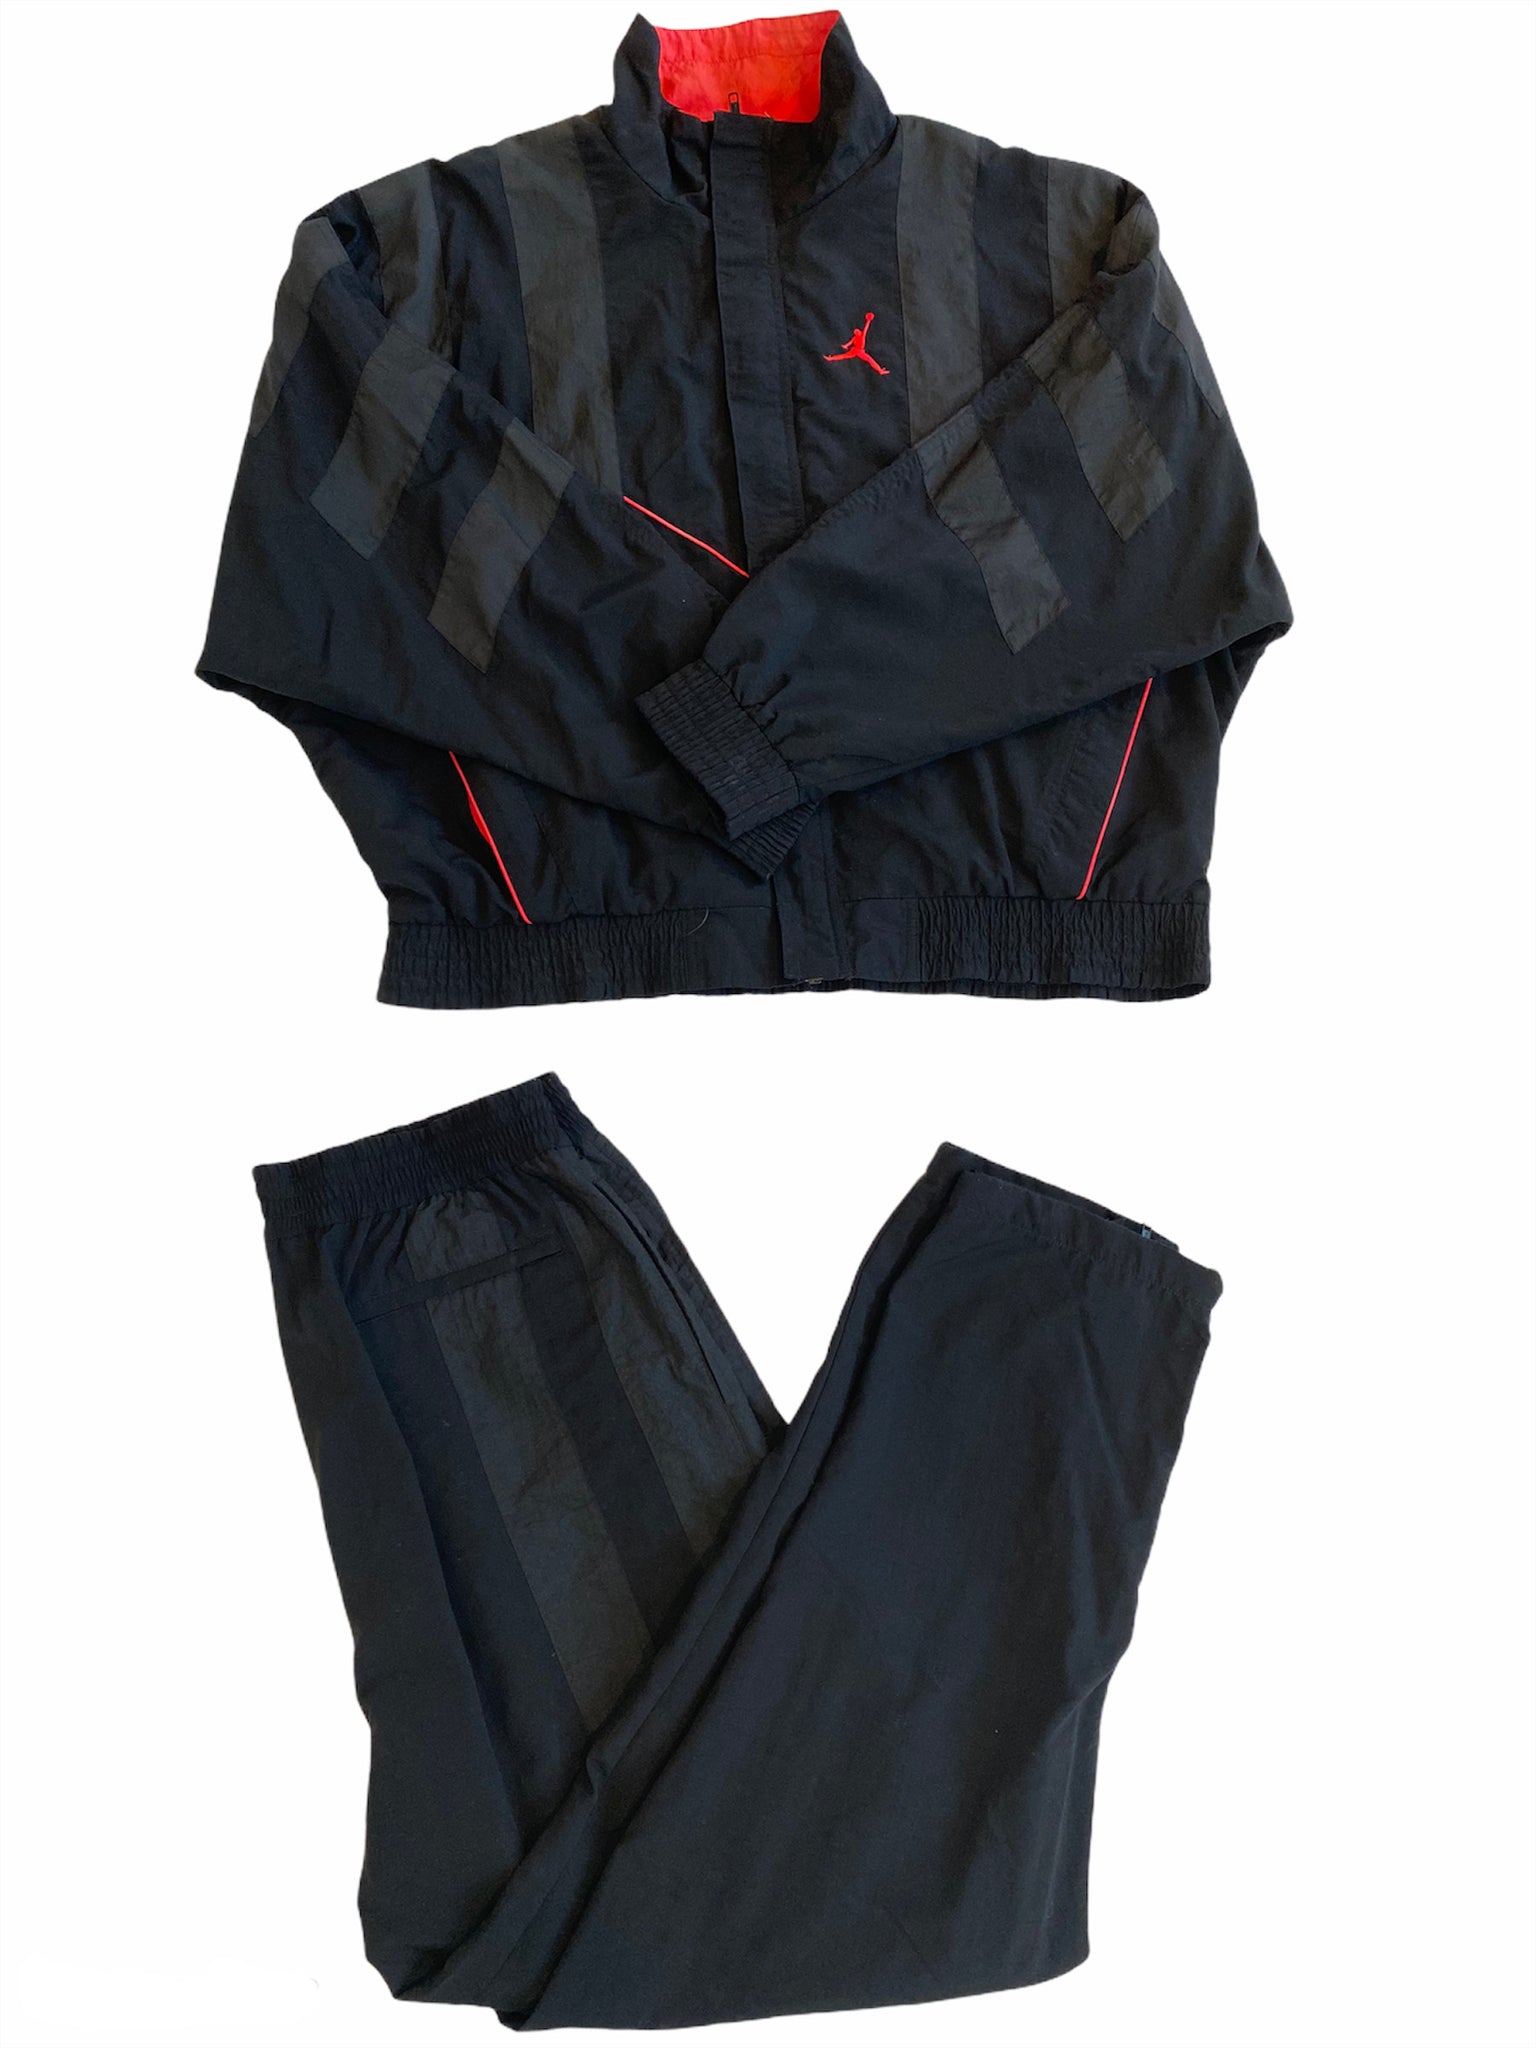 Nike Air Jordan VI Flight 91  Warm up Suit Tracksuit Black/ Infrared  Size XLarge freeshipping - Unique Pieces Vintage